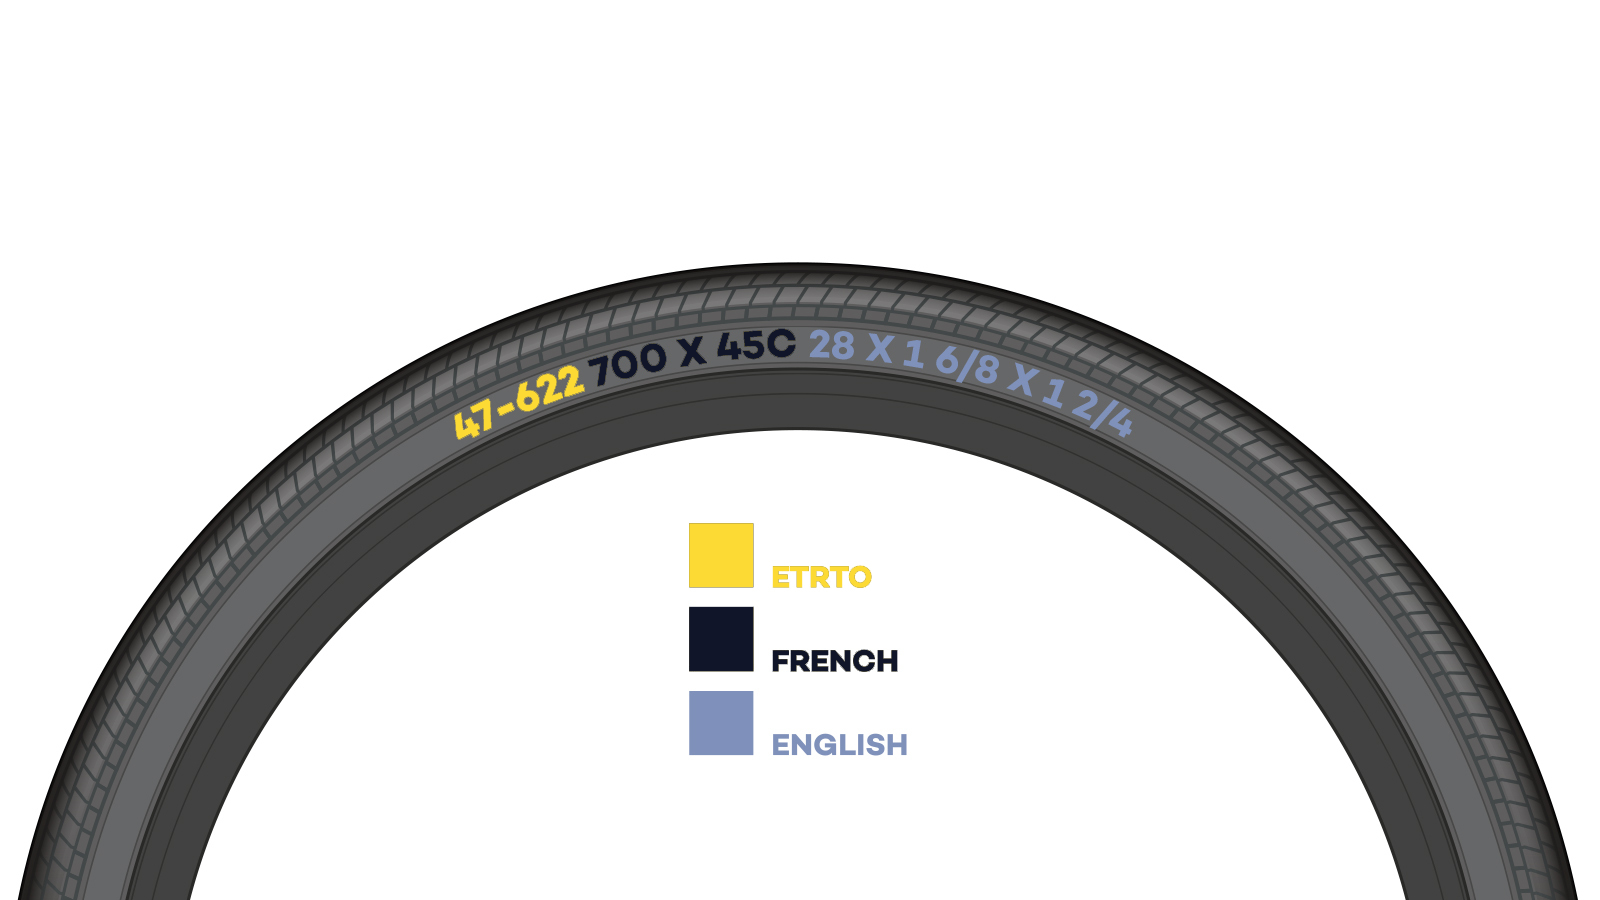 race bike tire size systems